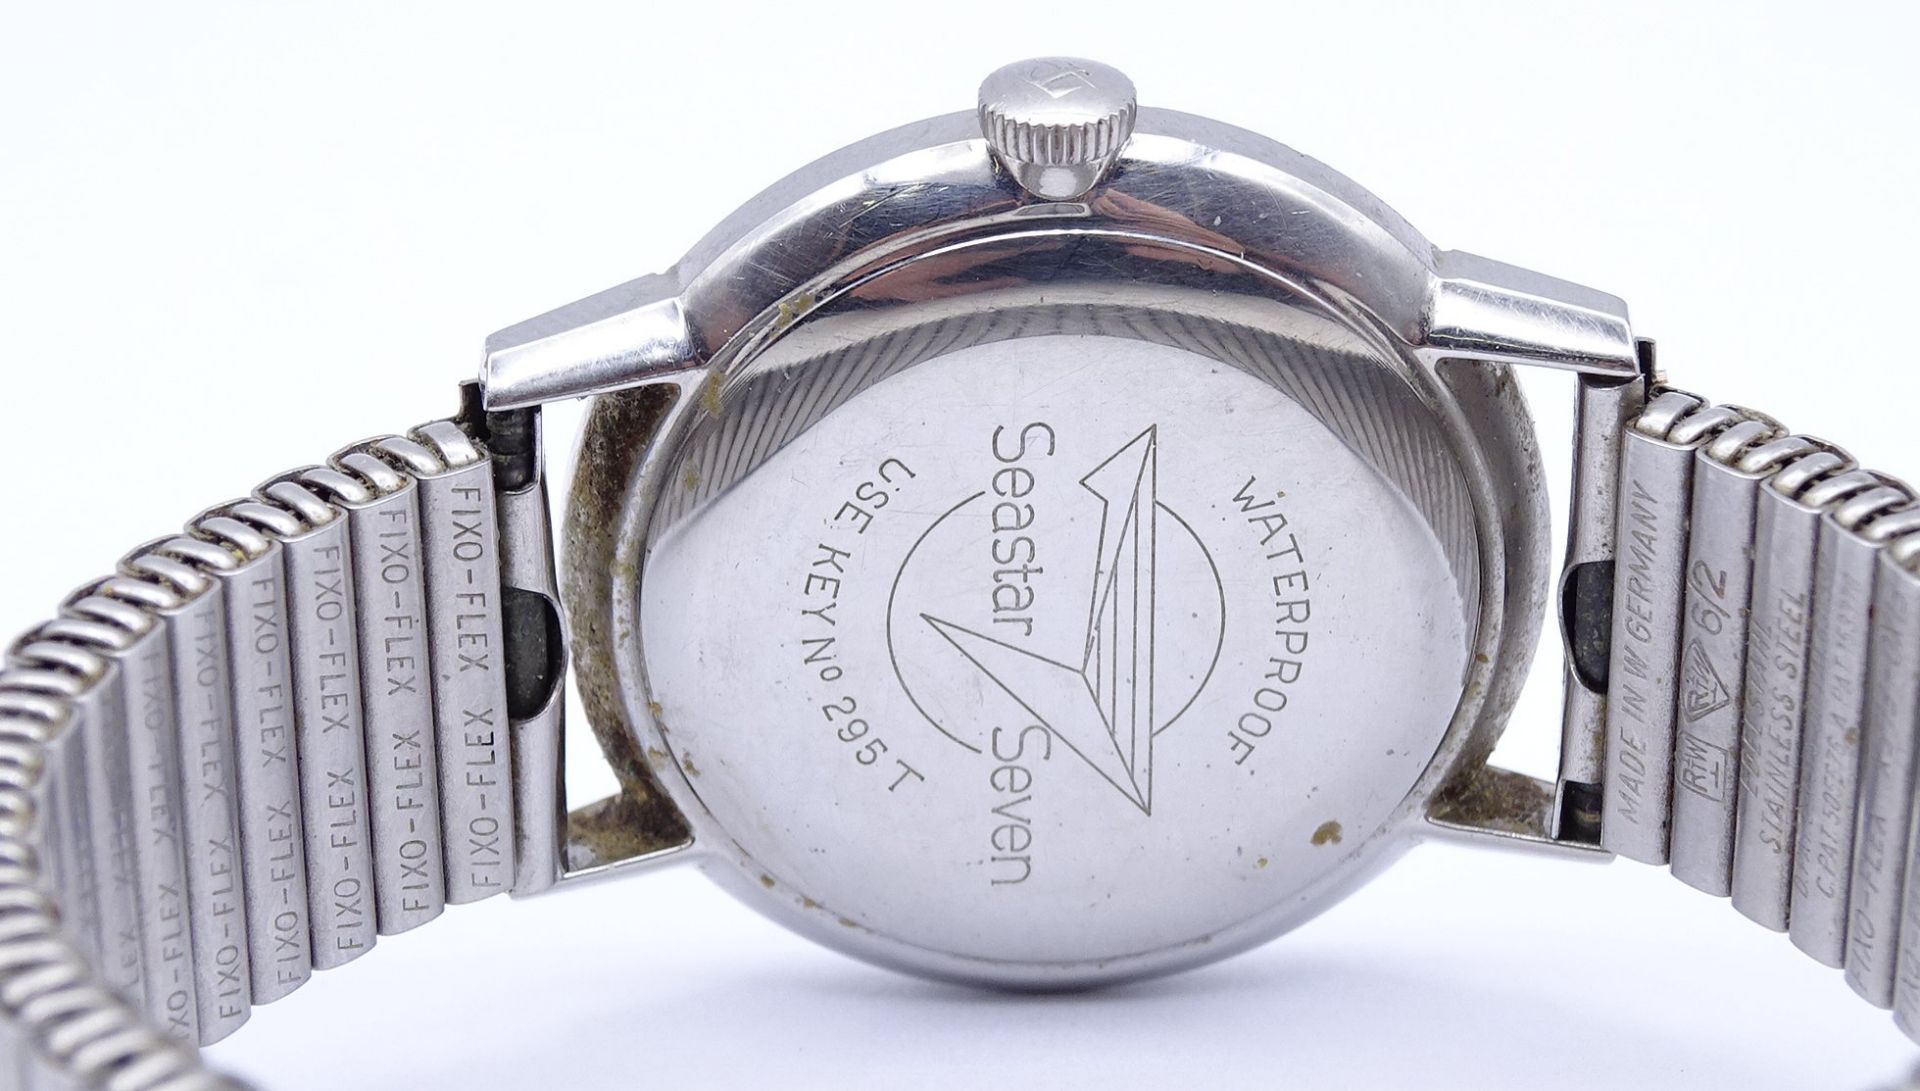 Herren Armbanduhr "Tissot" Seastar Seven, mechanisch, Werk steht, D. 31,6mm,Krone fest, lose - Image 4 of 5